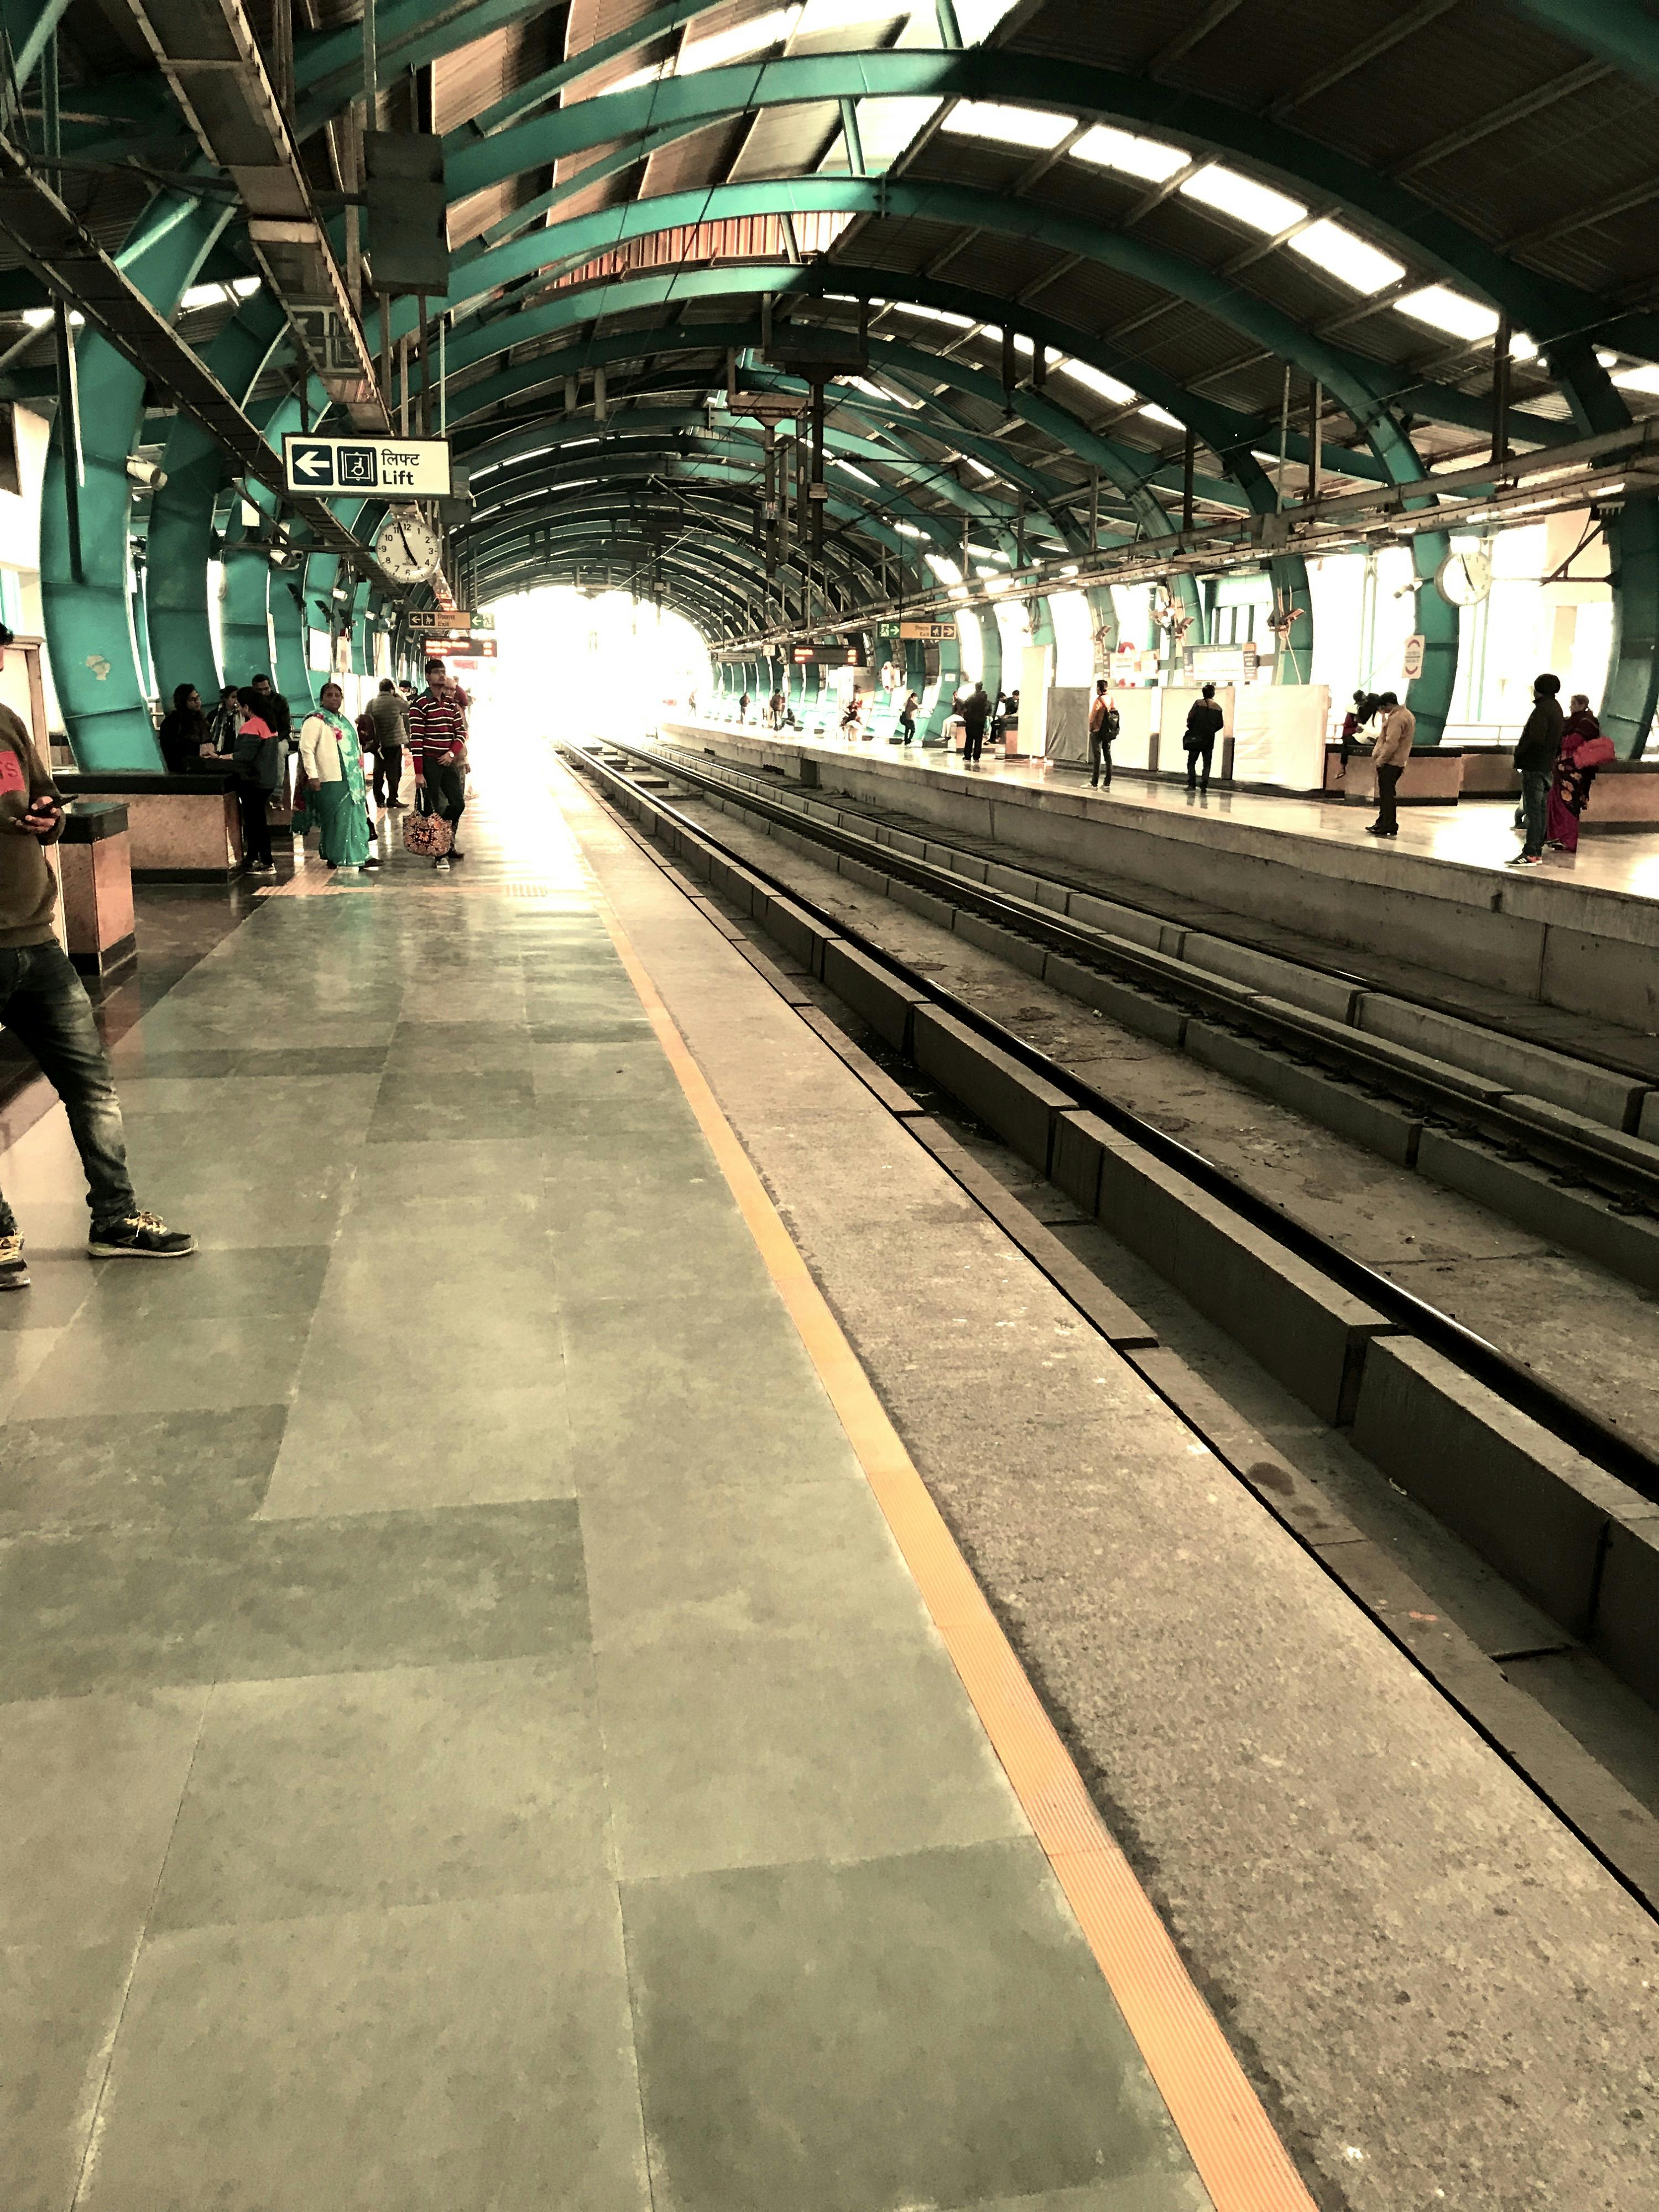 Free stock photo of metro station, railway platform, subway platform